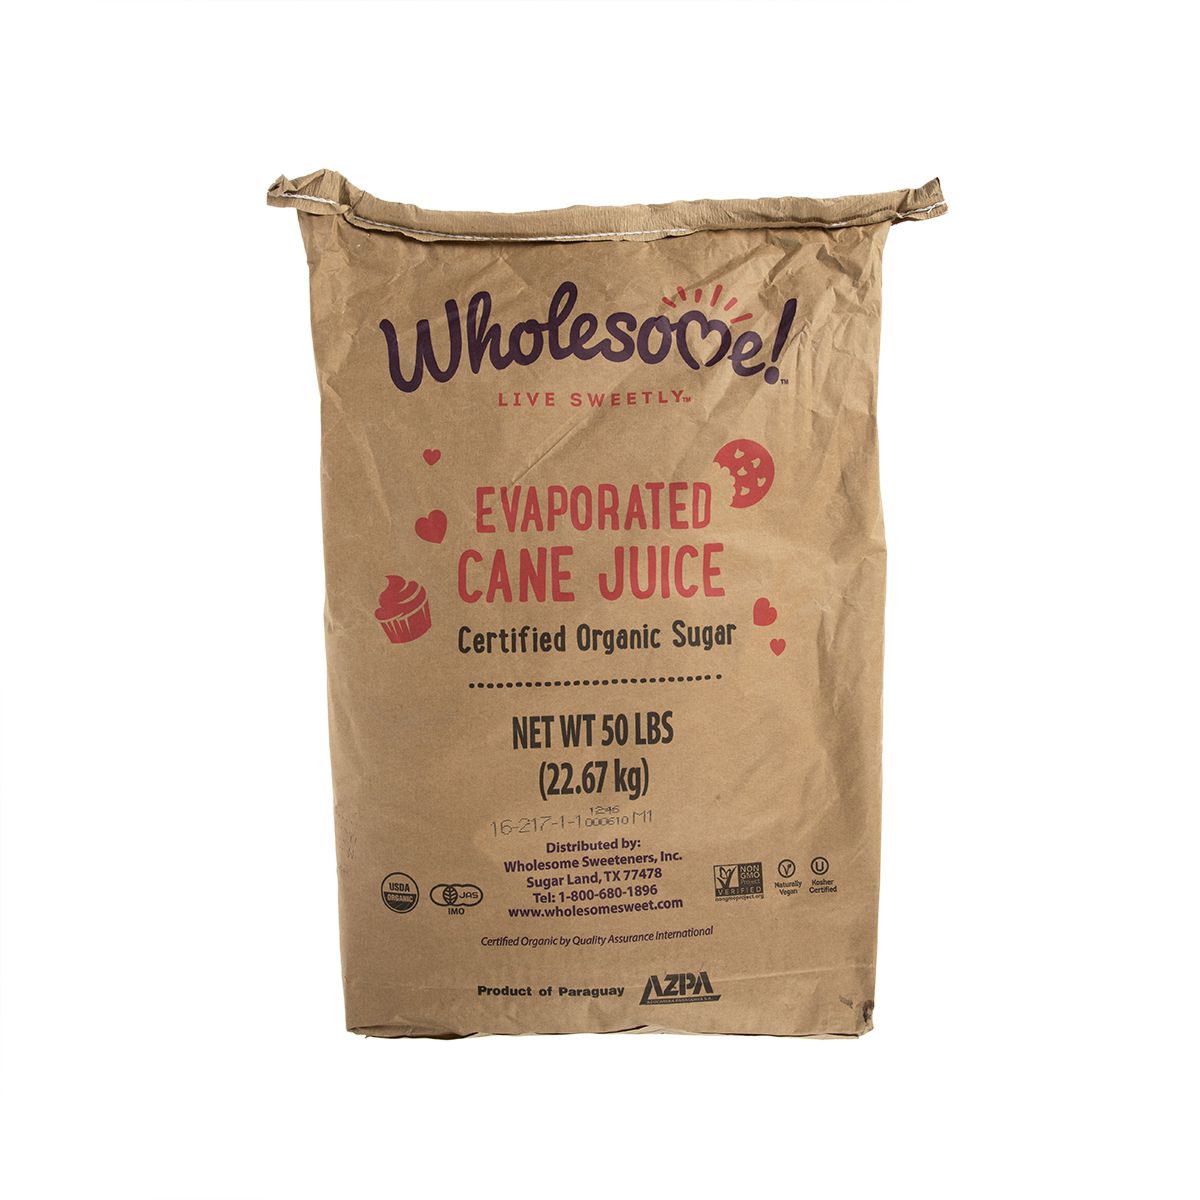 Wholesome Organic Cane Sugar